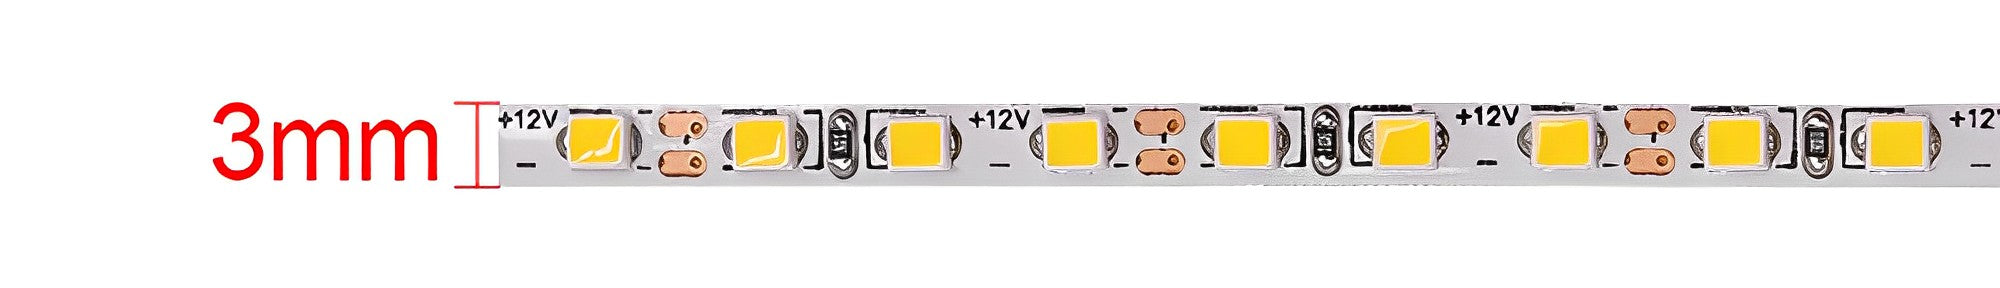 LED Striplight 12V - 2025 168LED 3mm IP20 (5m Roll) - Future Light - LED Lights South Africa